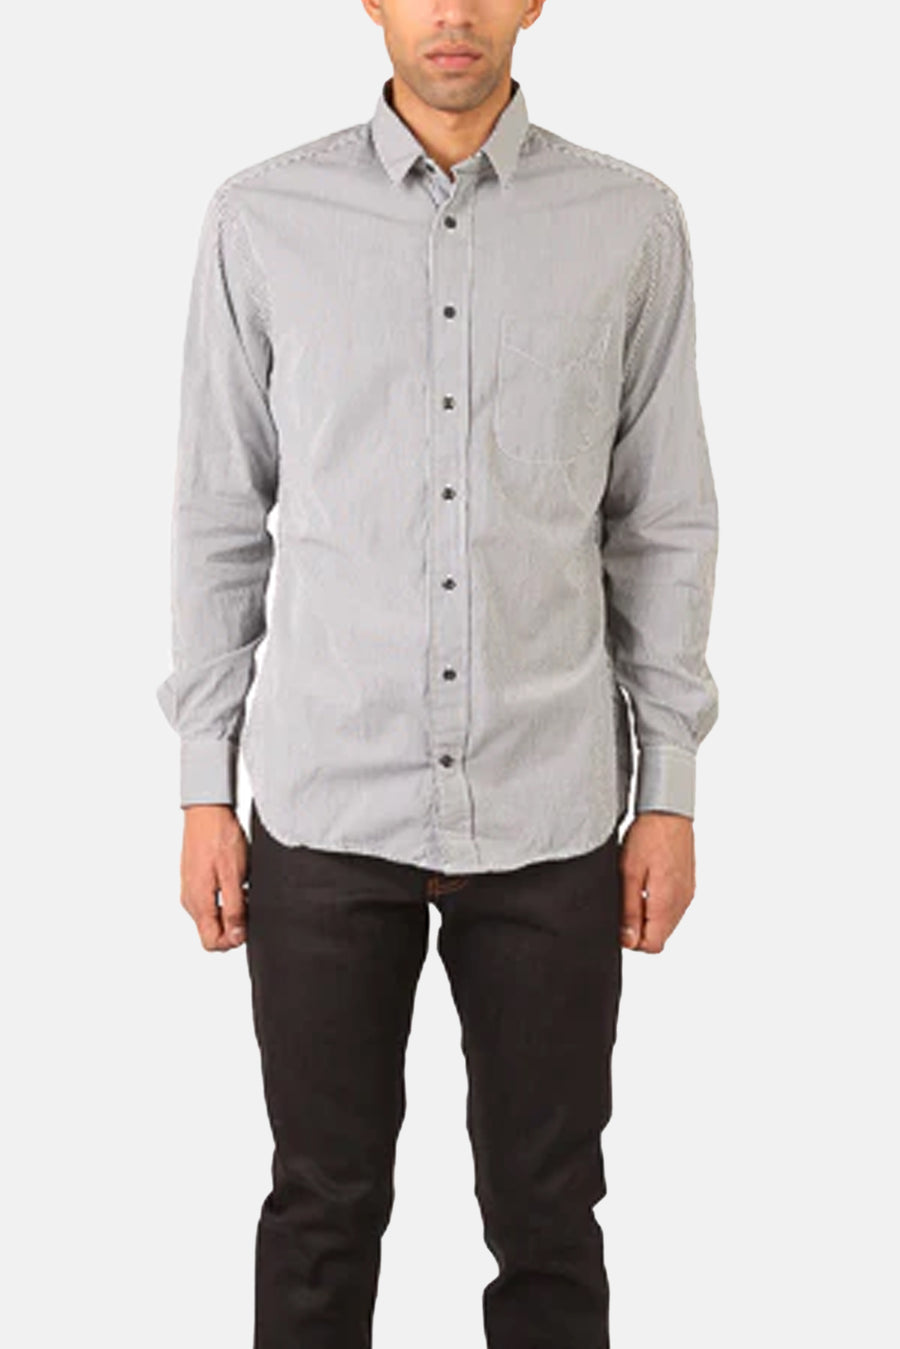 Pinpoint Shirt Black/White Stripe - blueandcream